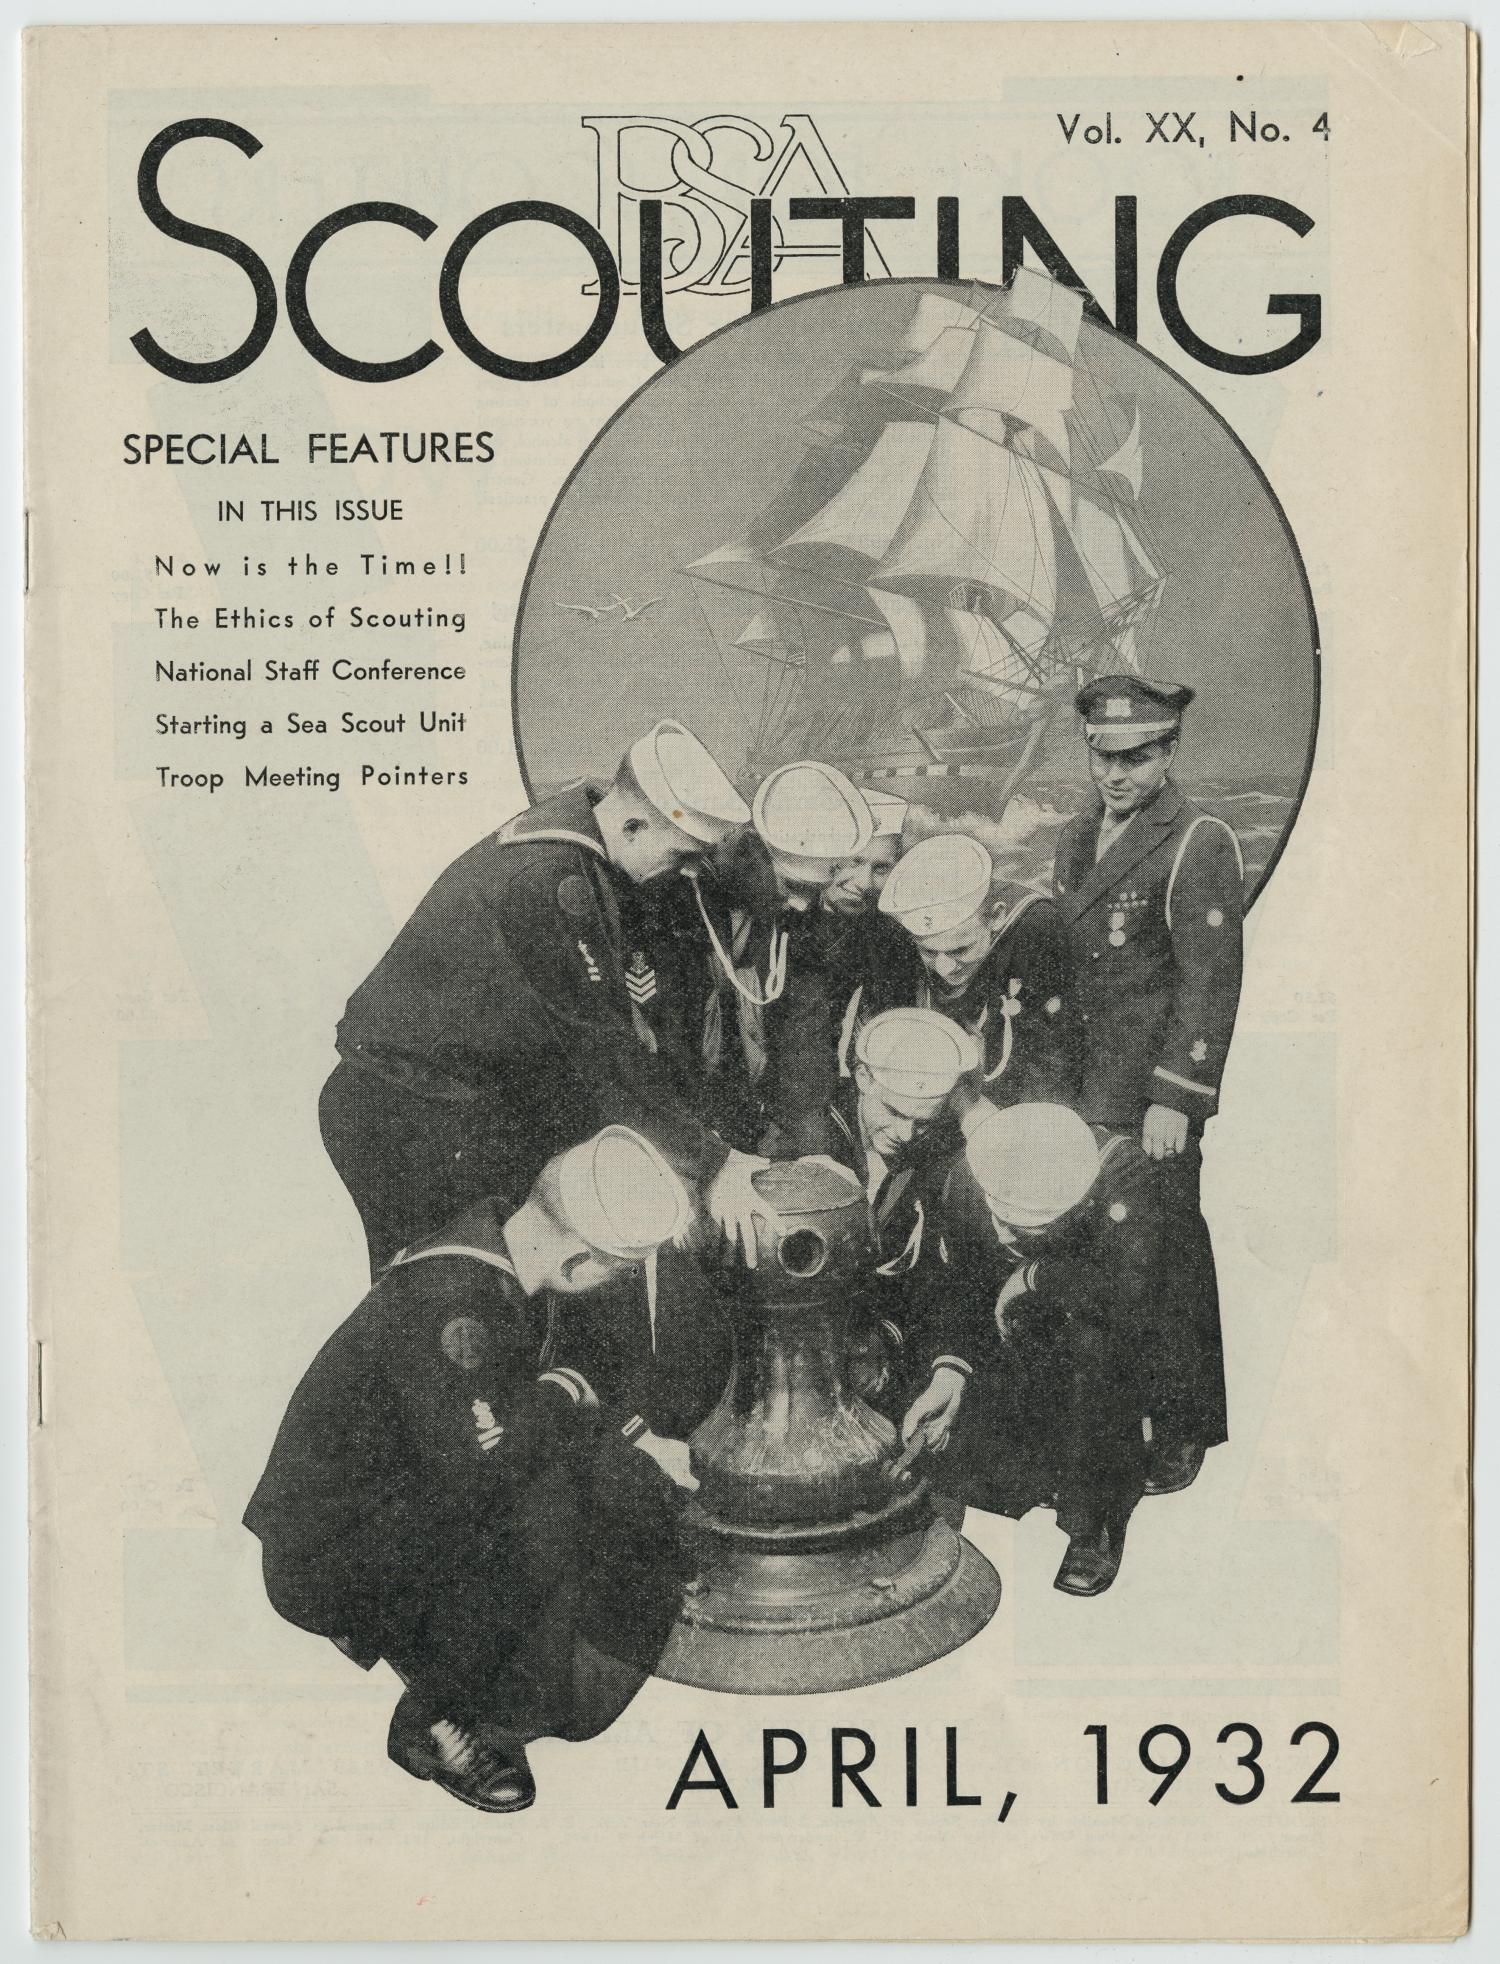 Scouting, Volume 20, Number 4, April 1932
                                                
                                                    93
                                                